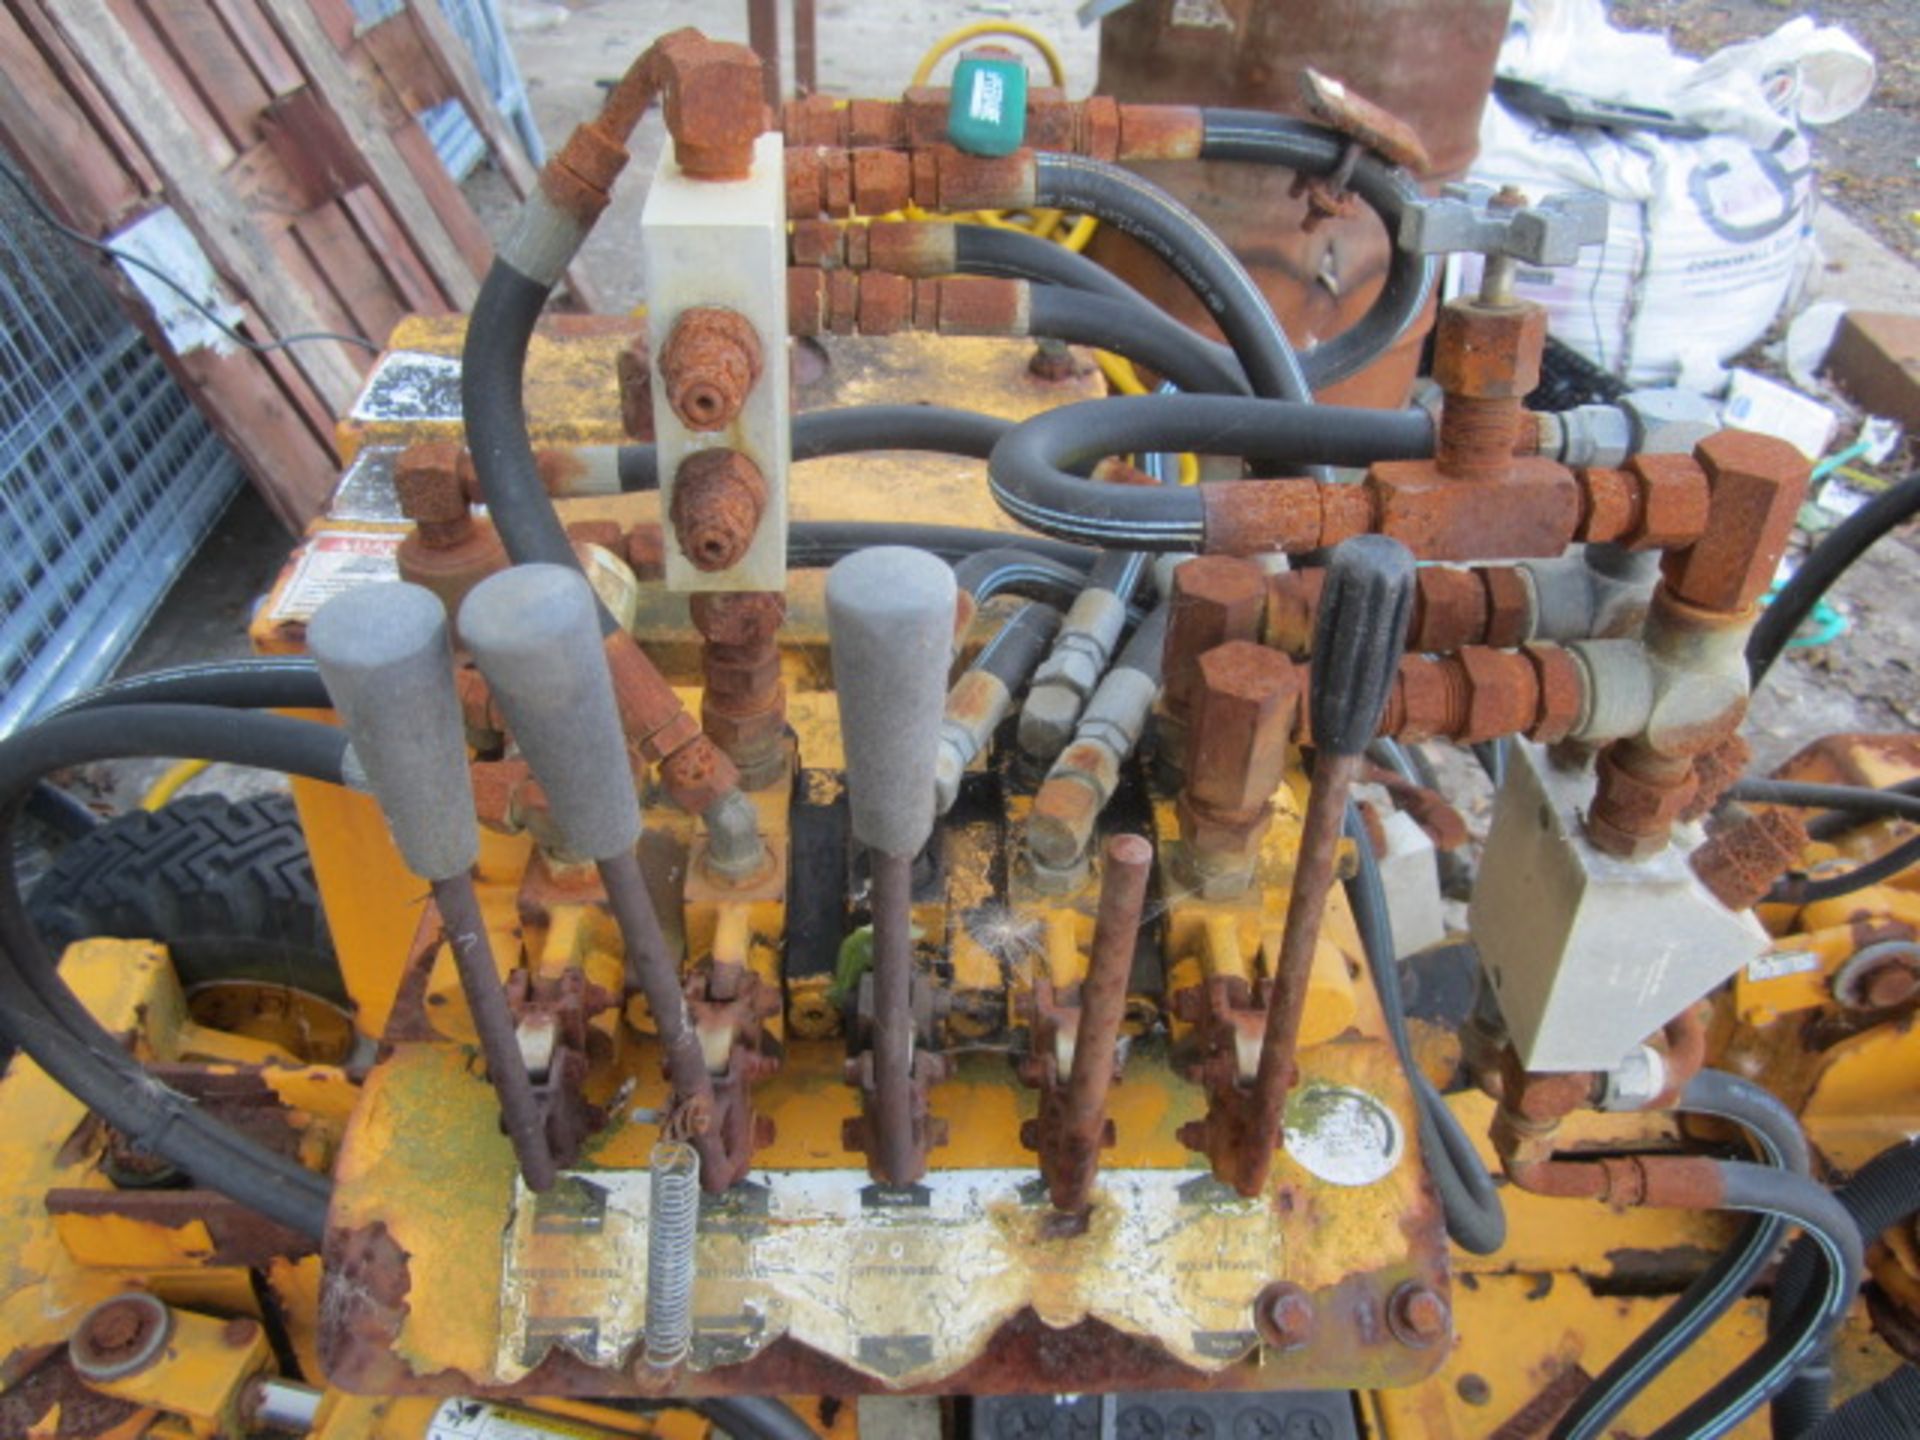 Carlton 2500-4 stump grinder, Kohler petrol engine - for spares or repair - Image 5 of 6